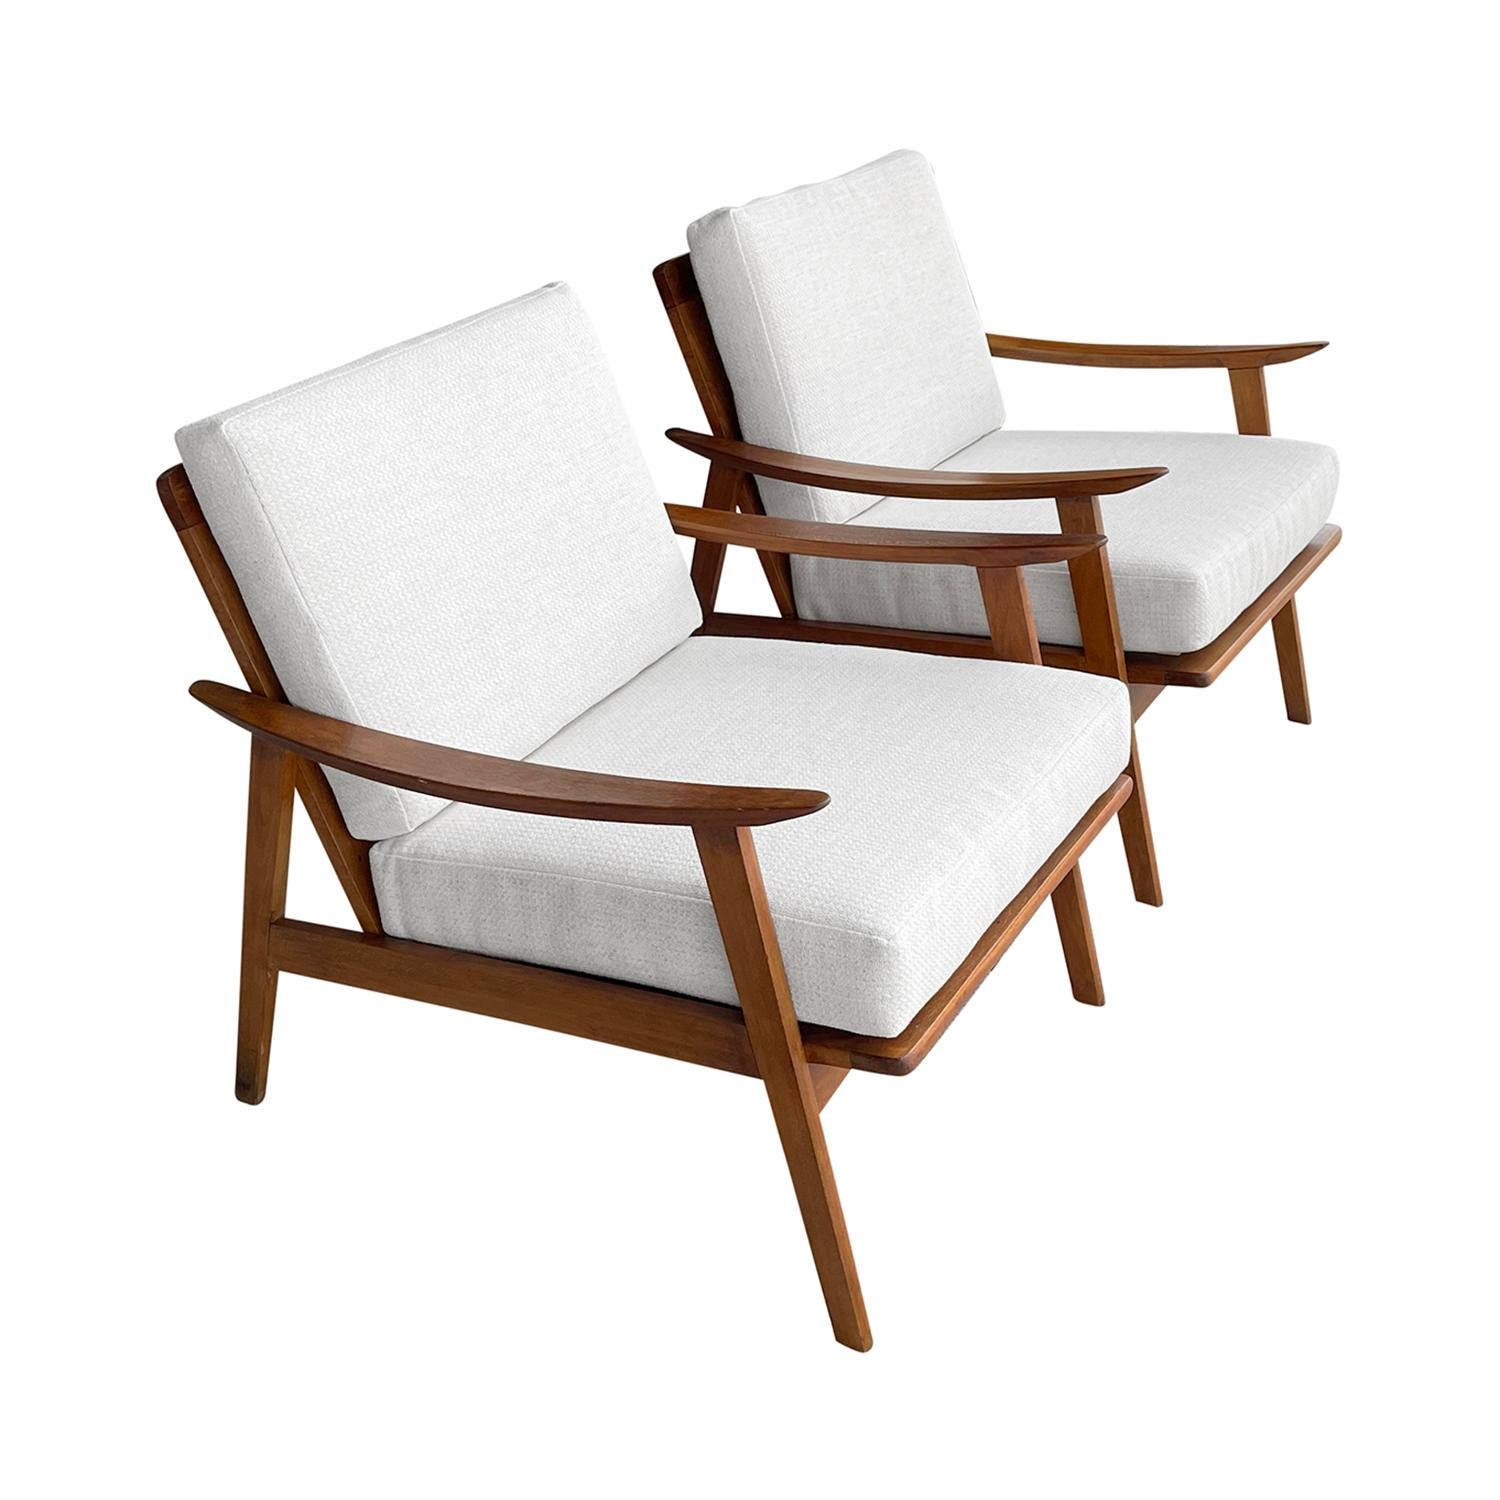 20th Century Danish Vintage Modern Pair of Open Teak Chairs by Kai Kristiansen In Good Condition For Sale In West Palm Beach, FL